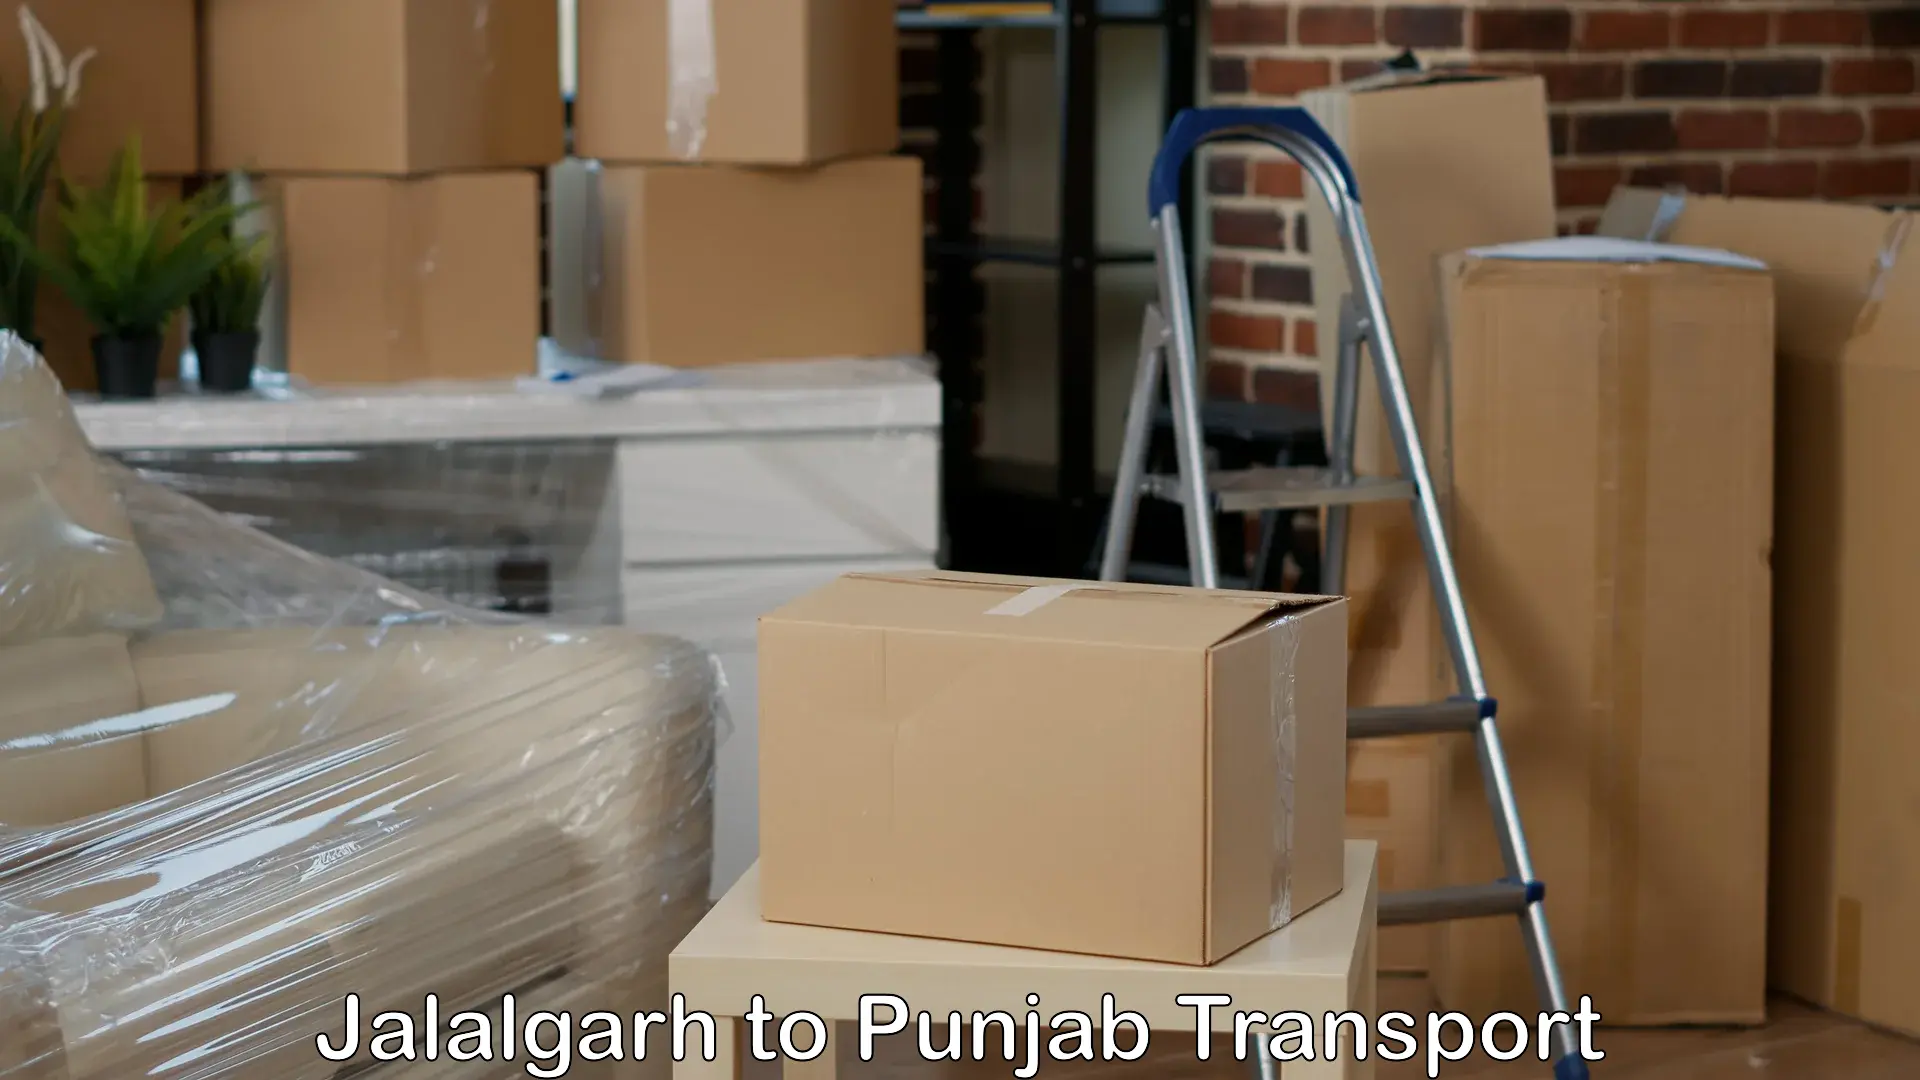 Truck transport companies in India Jalalgarh to Talwara